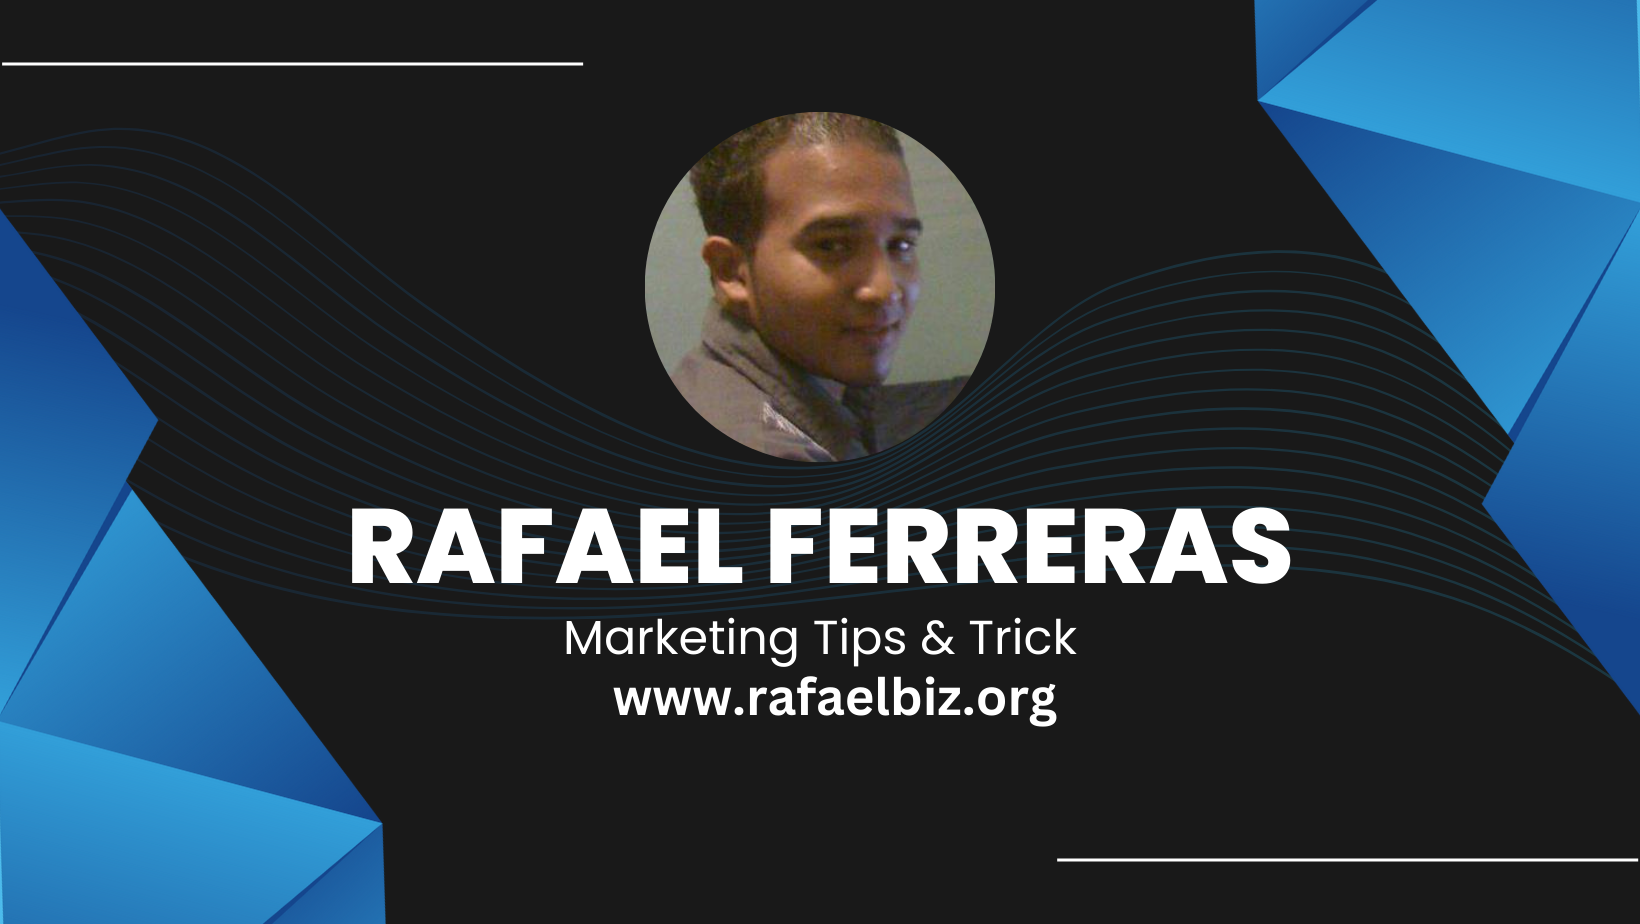 Rafael Ferreras